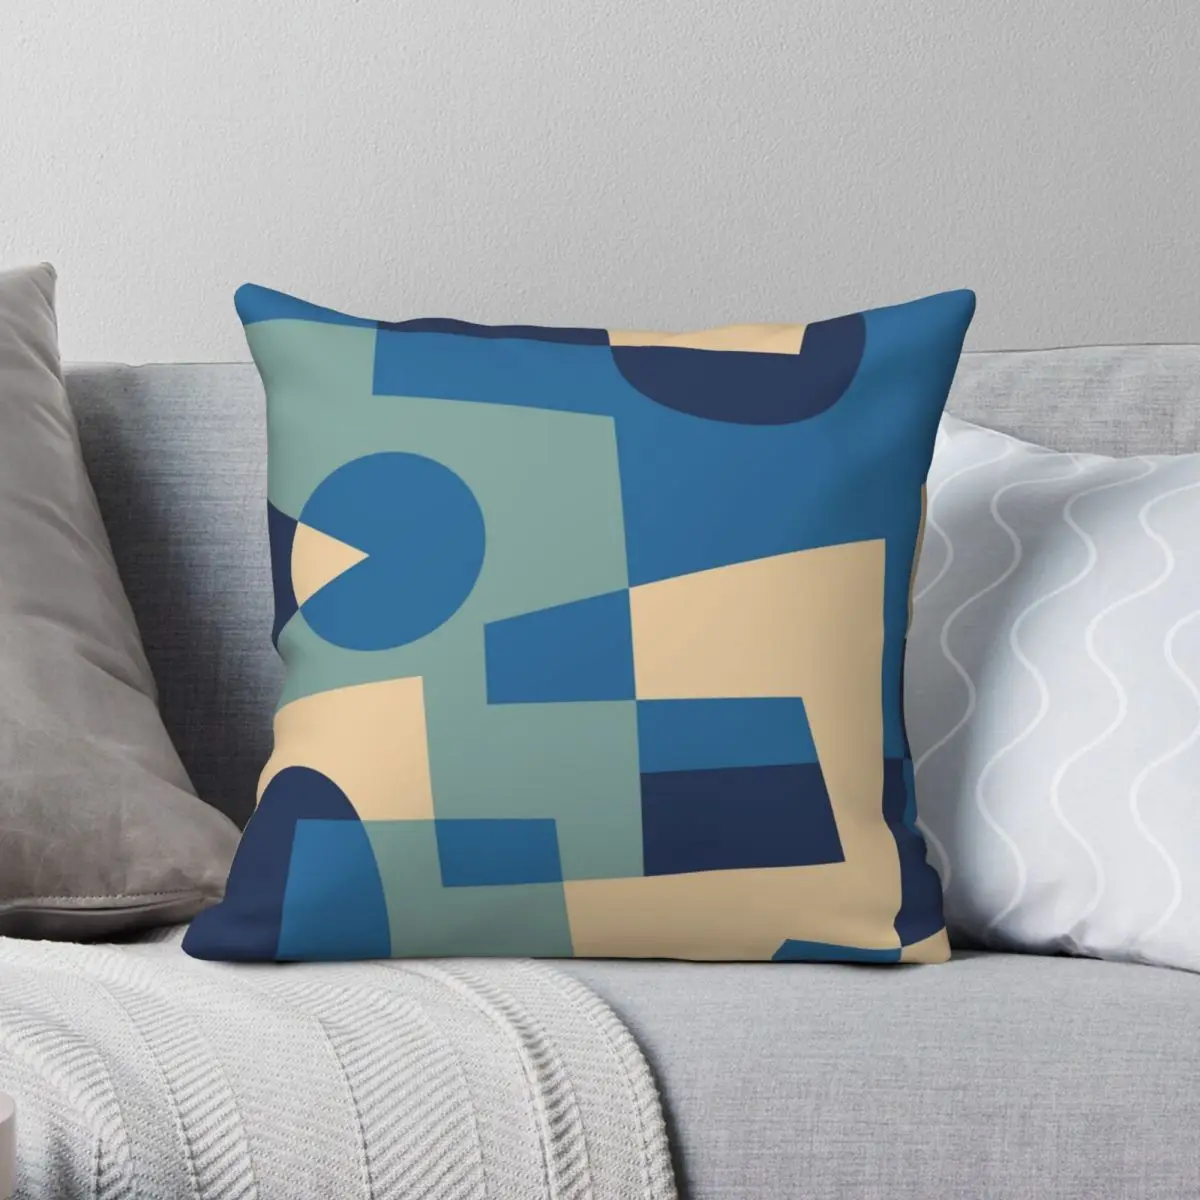 

Abstract IV In Blue Square Pillowcase Polyester Linen Velvet Printed Zip Decor Throw Pillow Case Car Cushion Cover